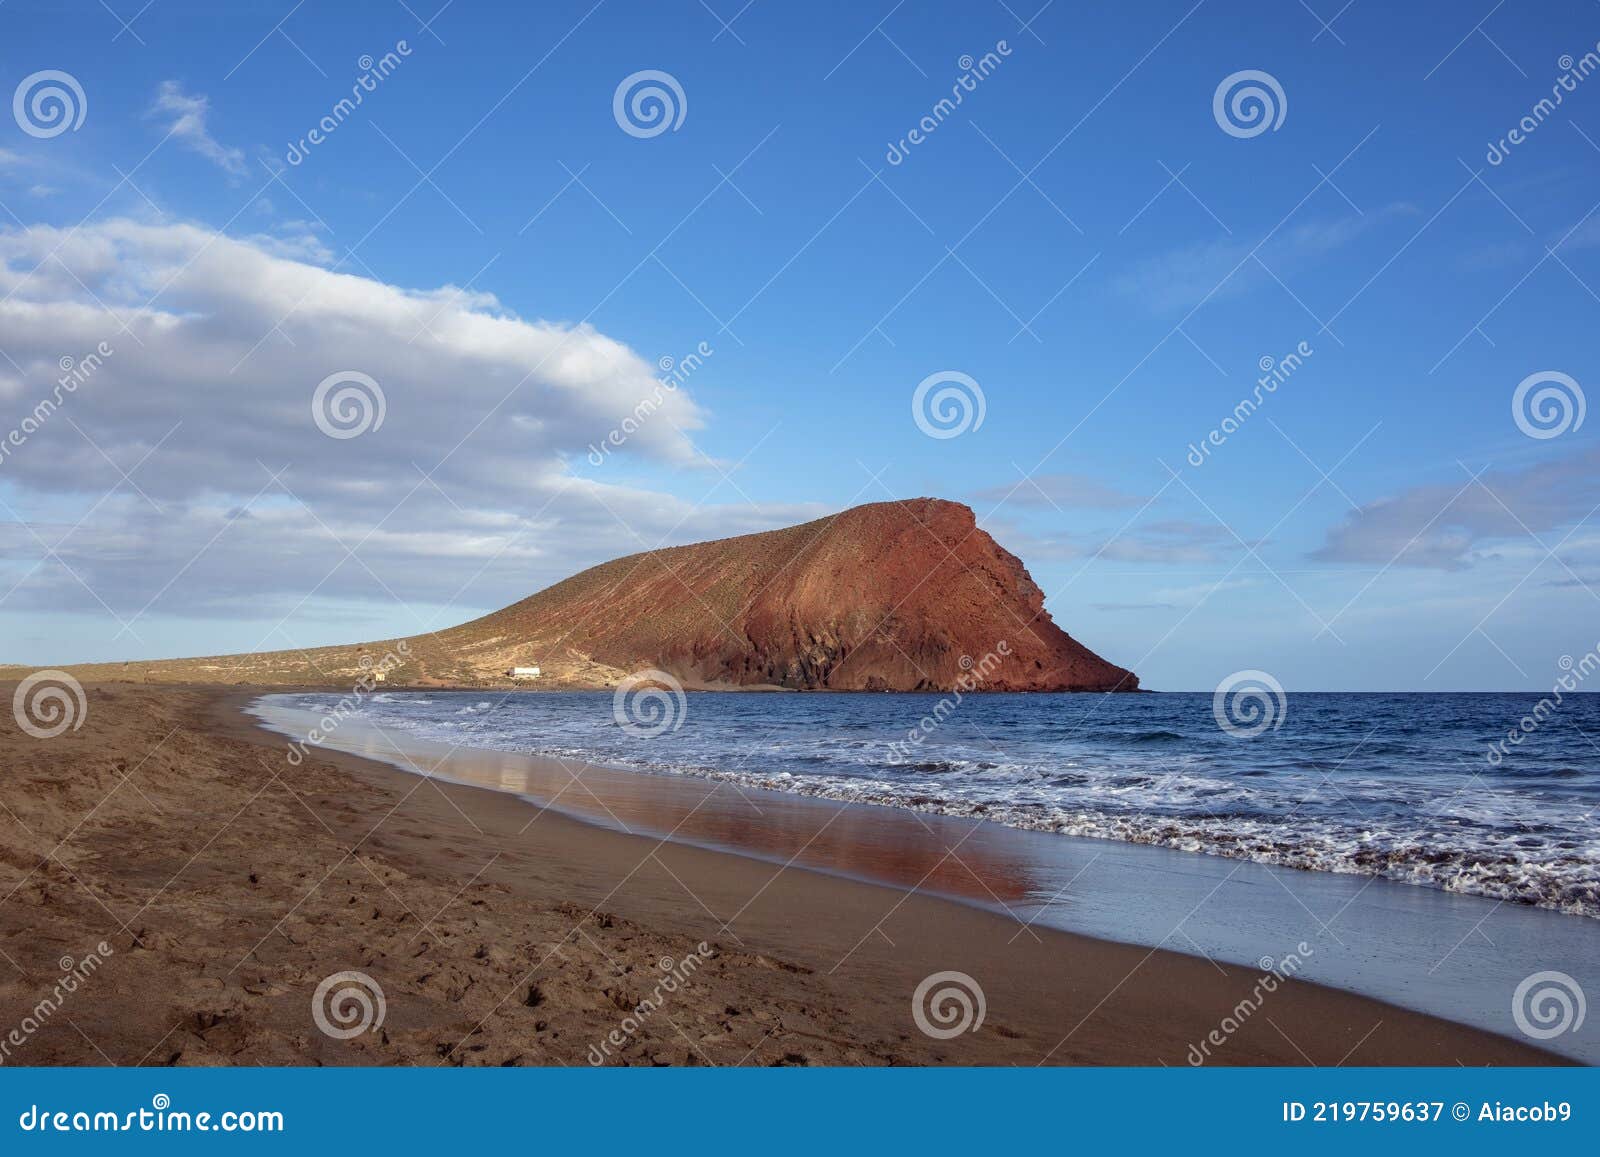 scenic views of montana roja from the beach playa tejita, tenerife, canary islands, spain